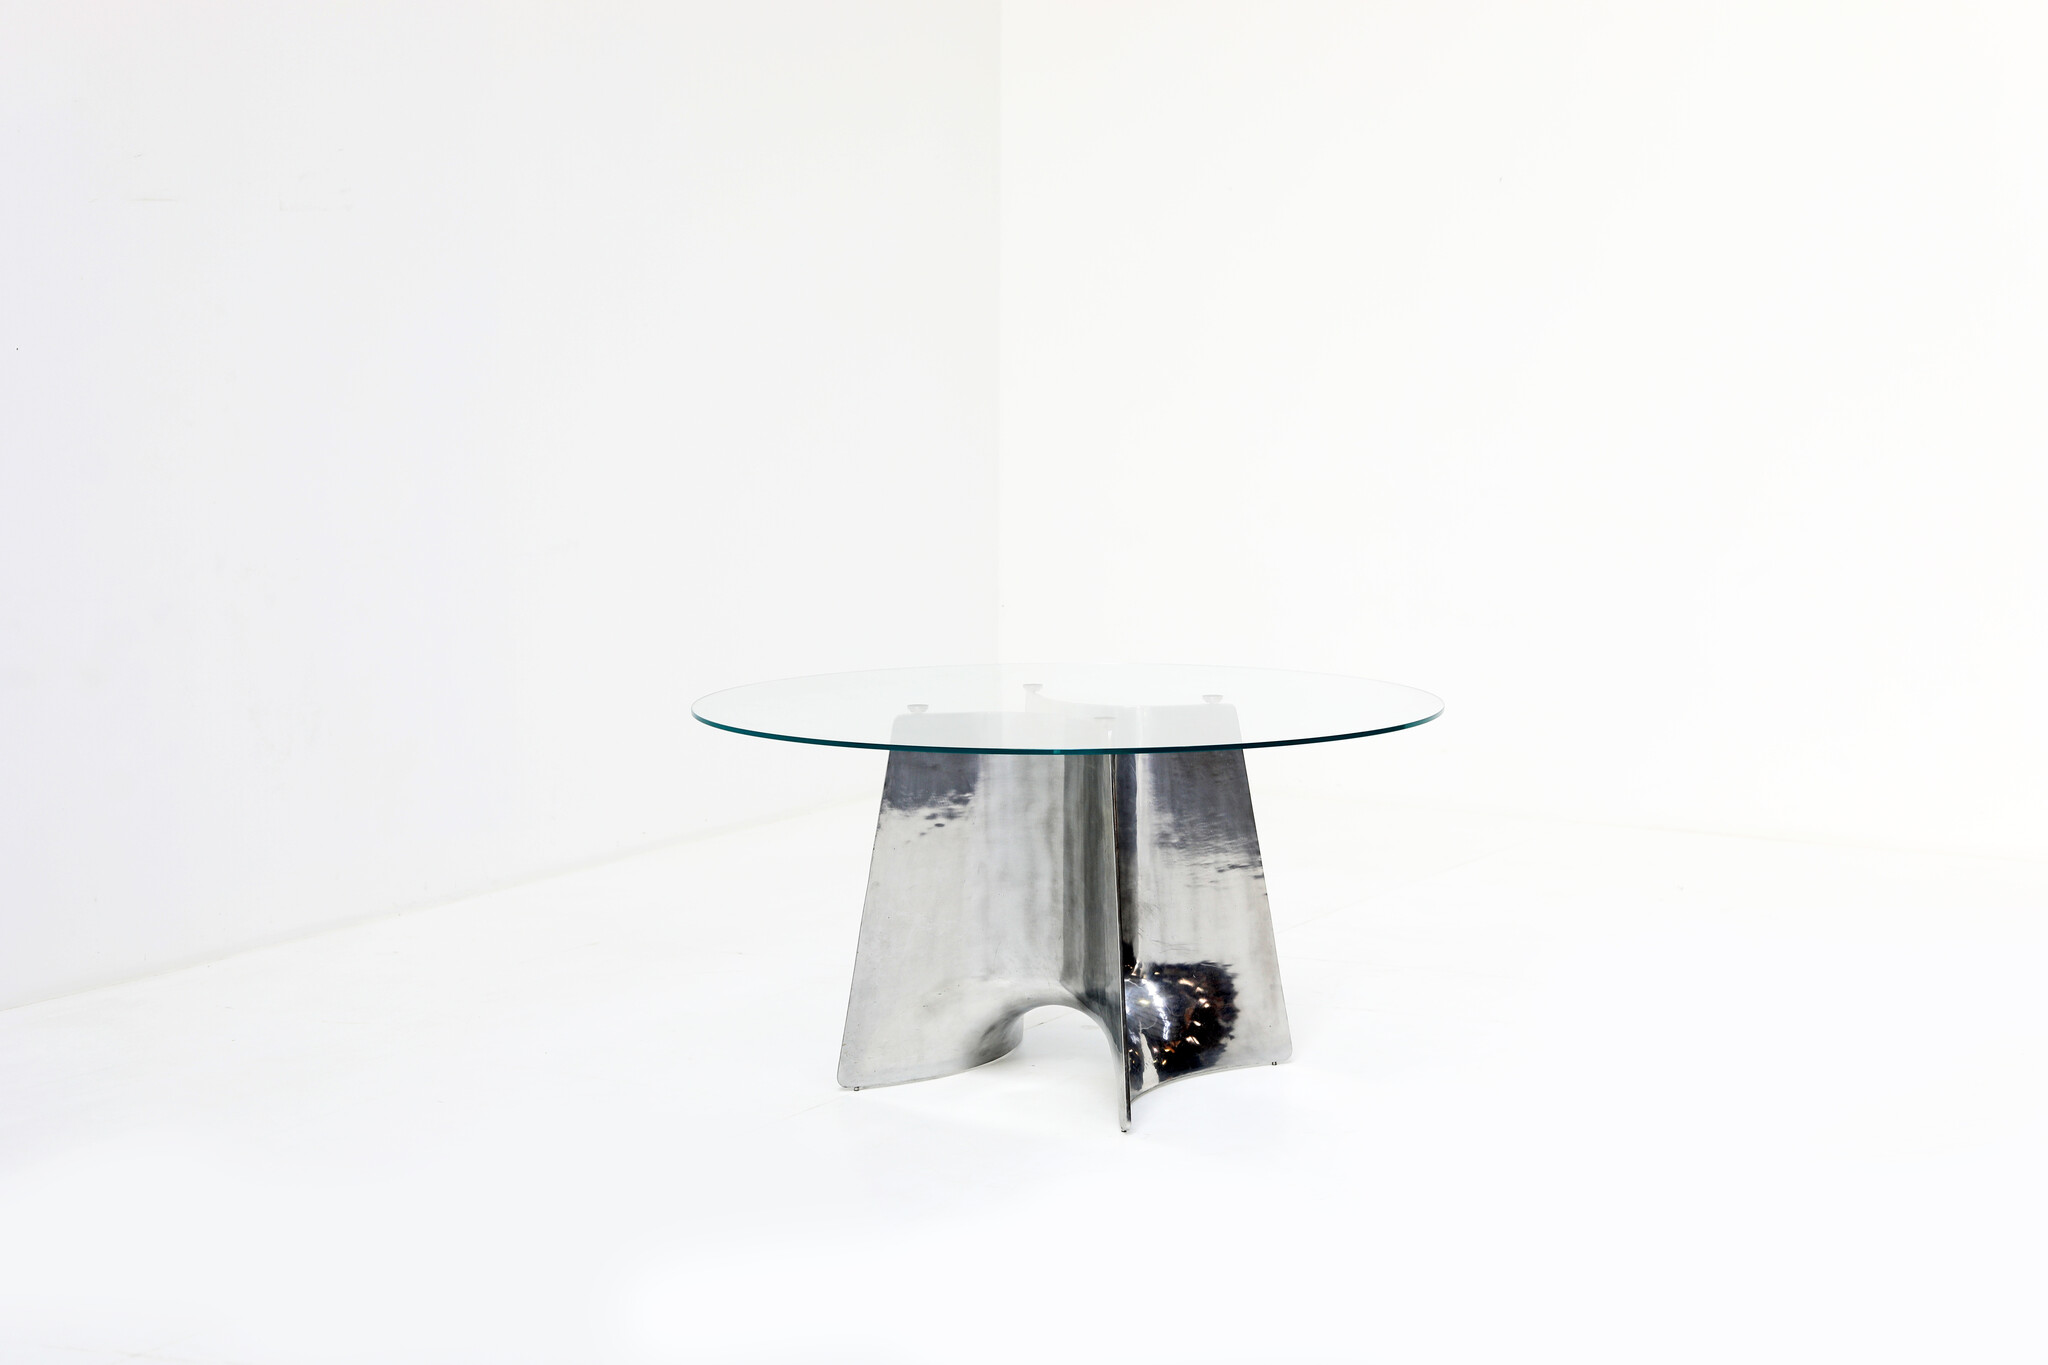 Baleri Italia Bentz aluminum table with glass top by Jeff Miller